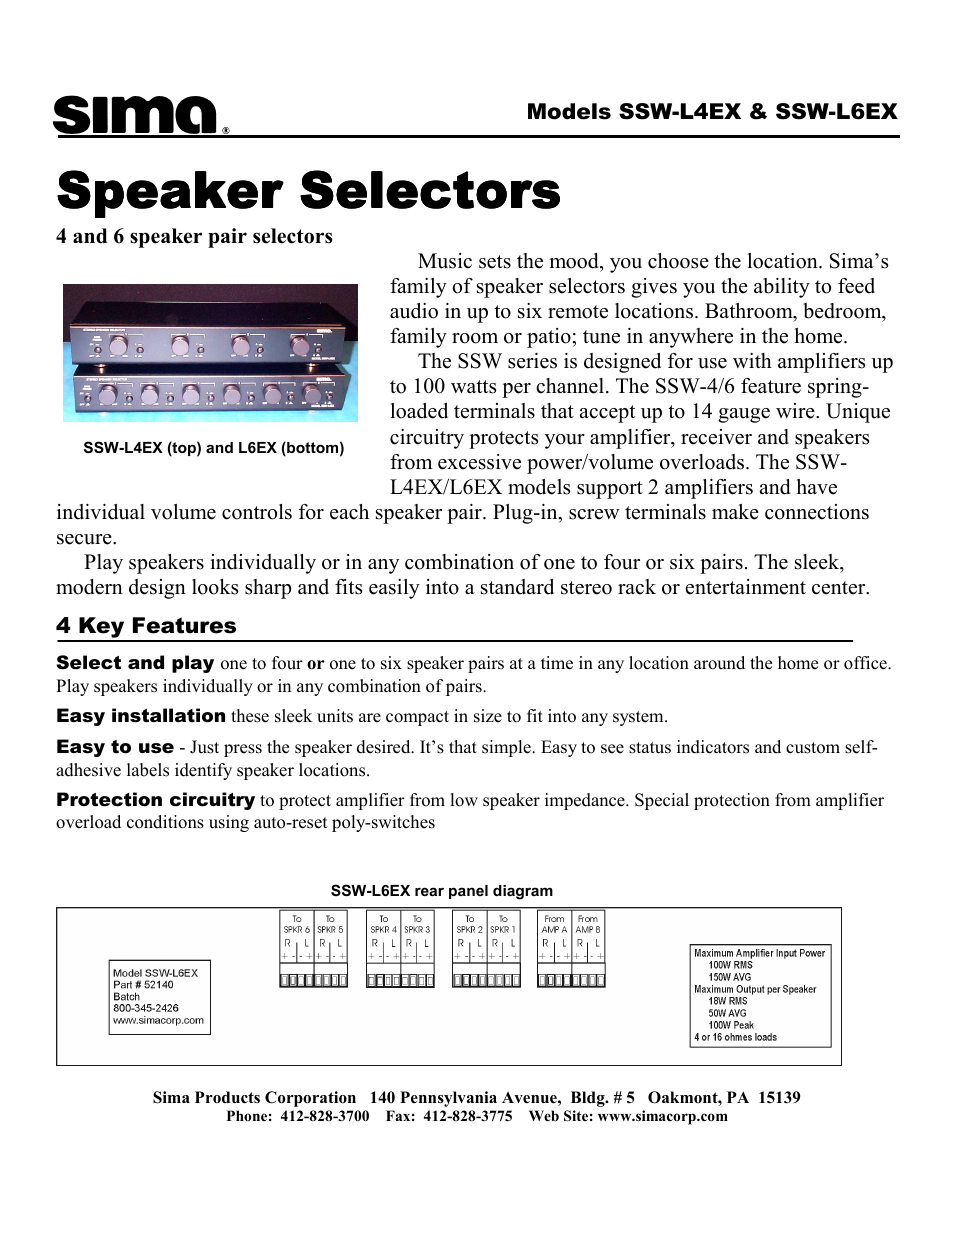 Speaker Selectors SSW-L6EX